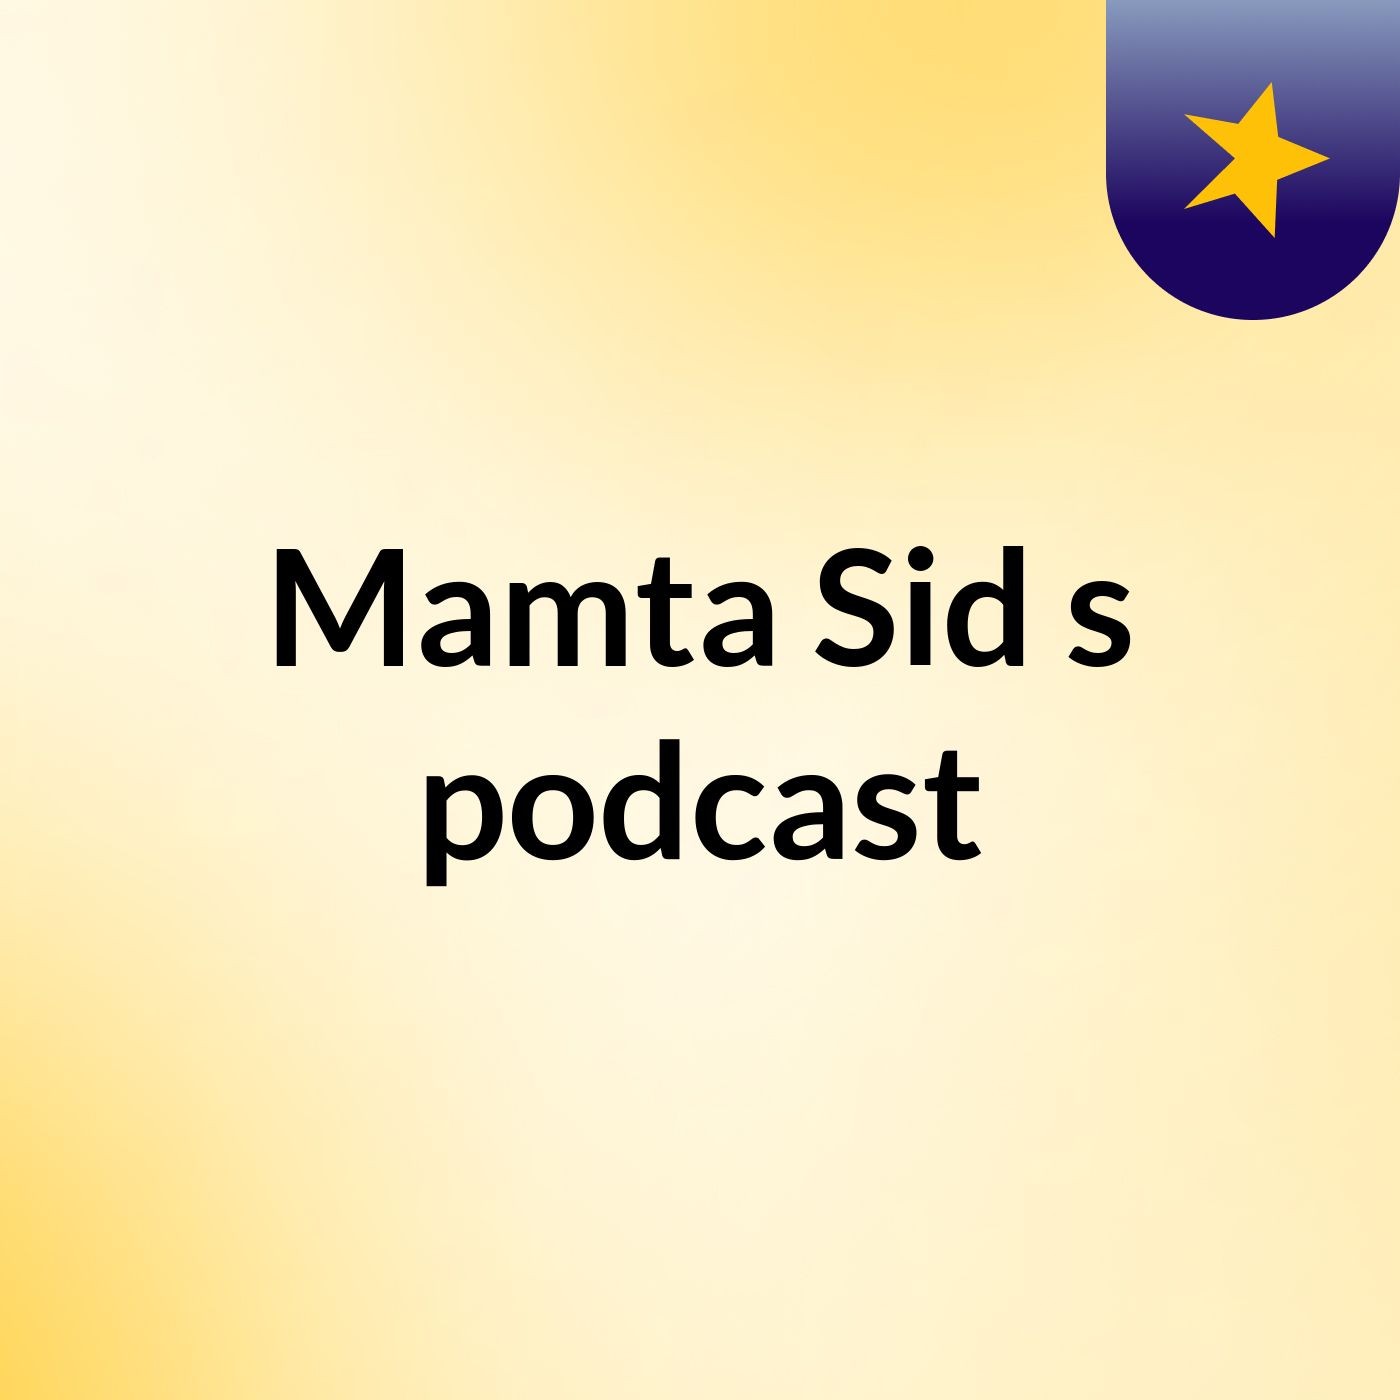 Episode 1 - Mamta Sid's podcast